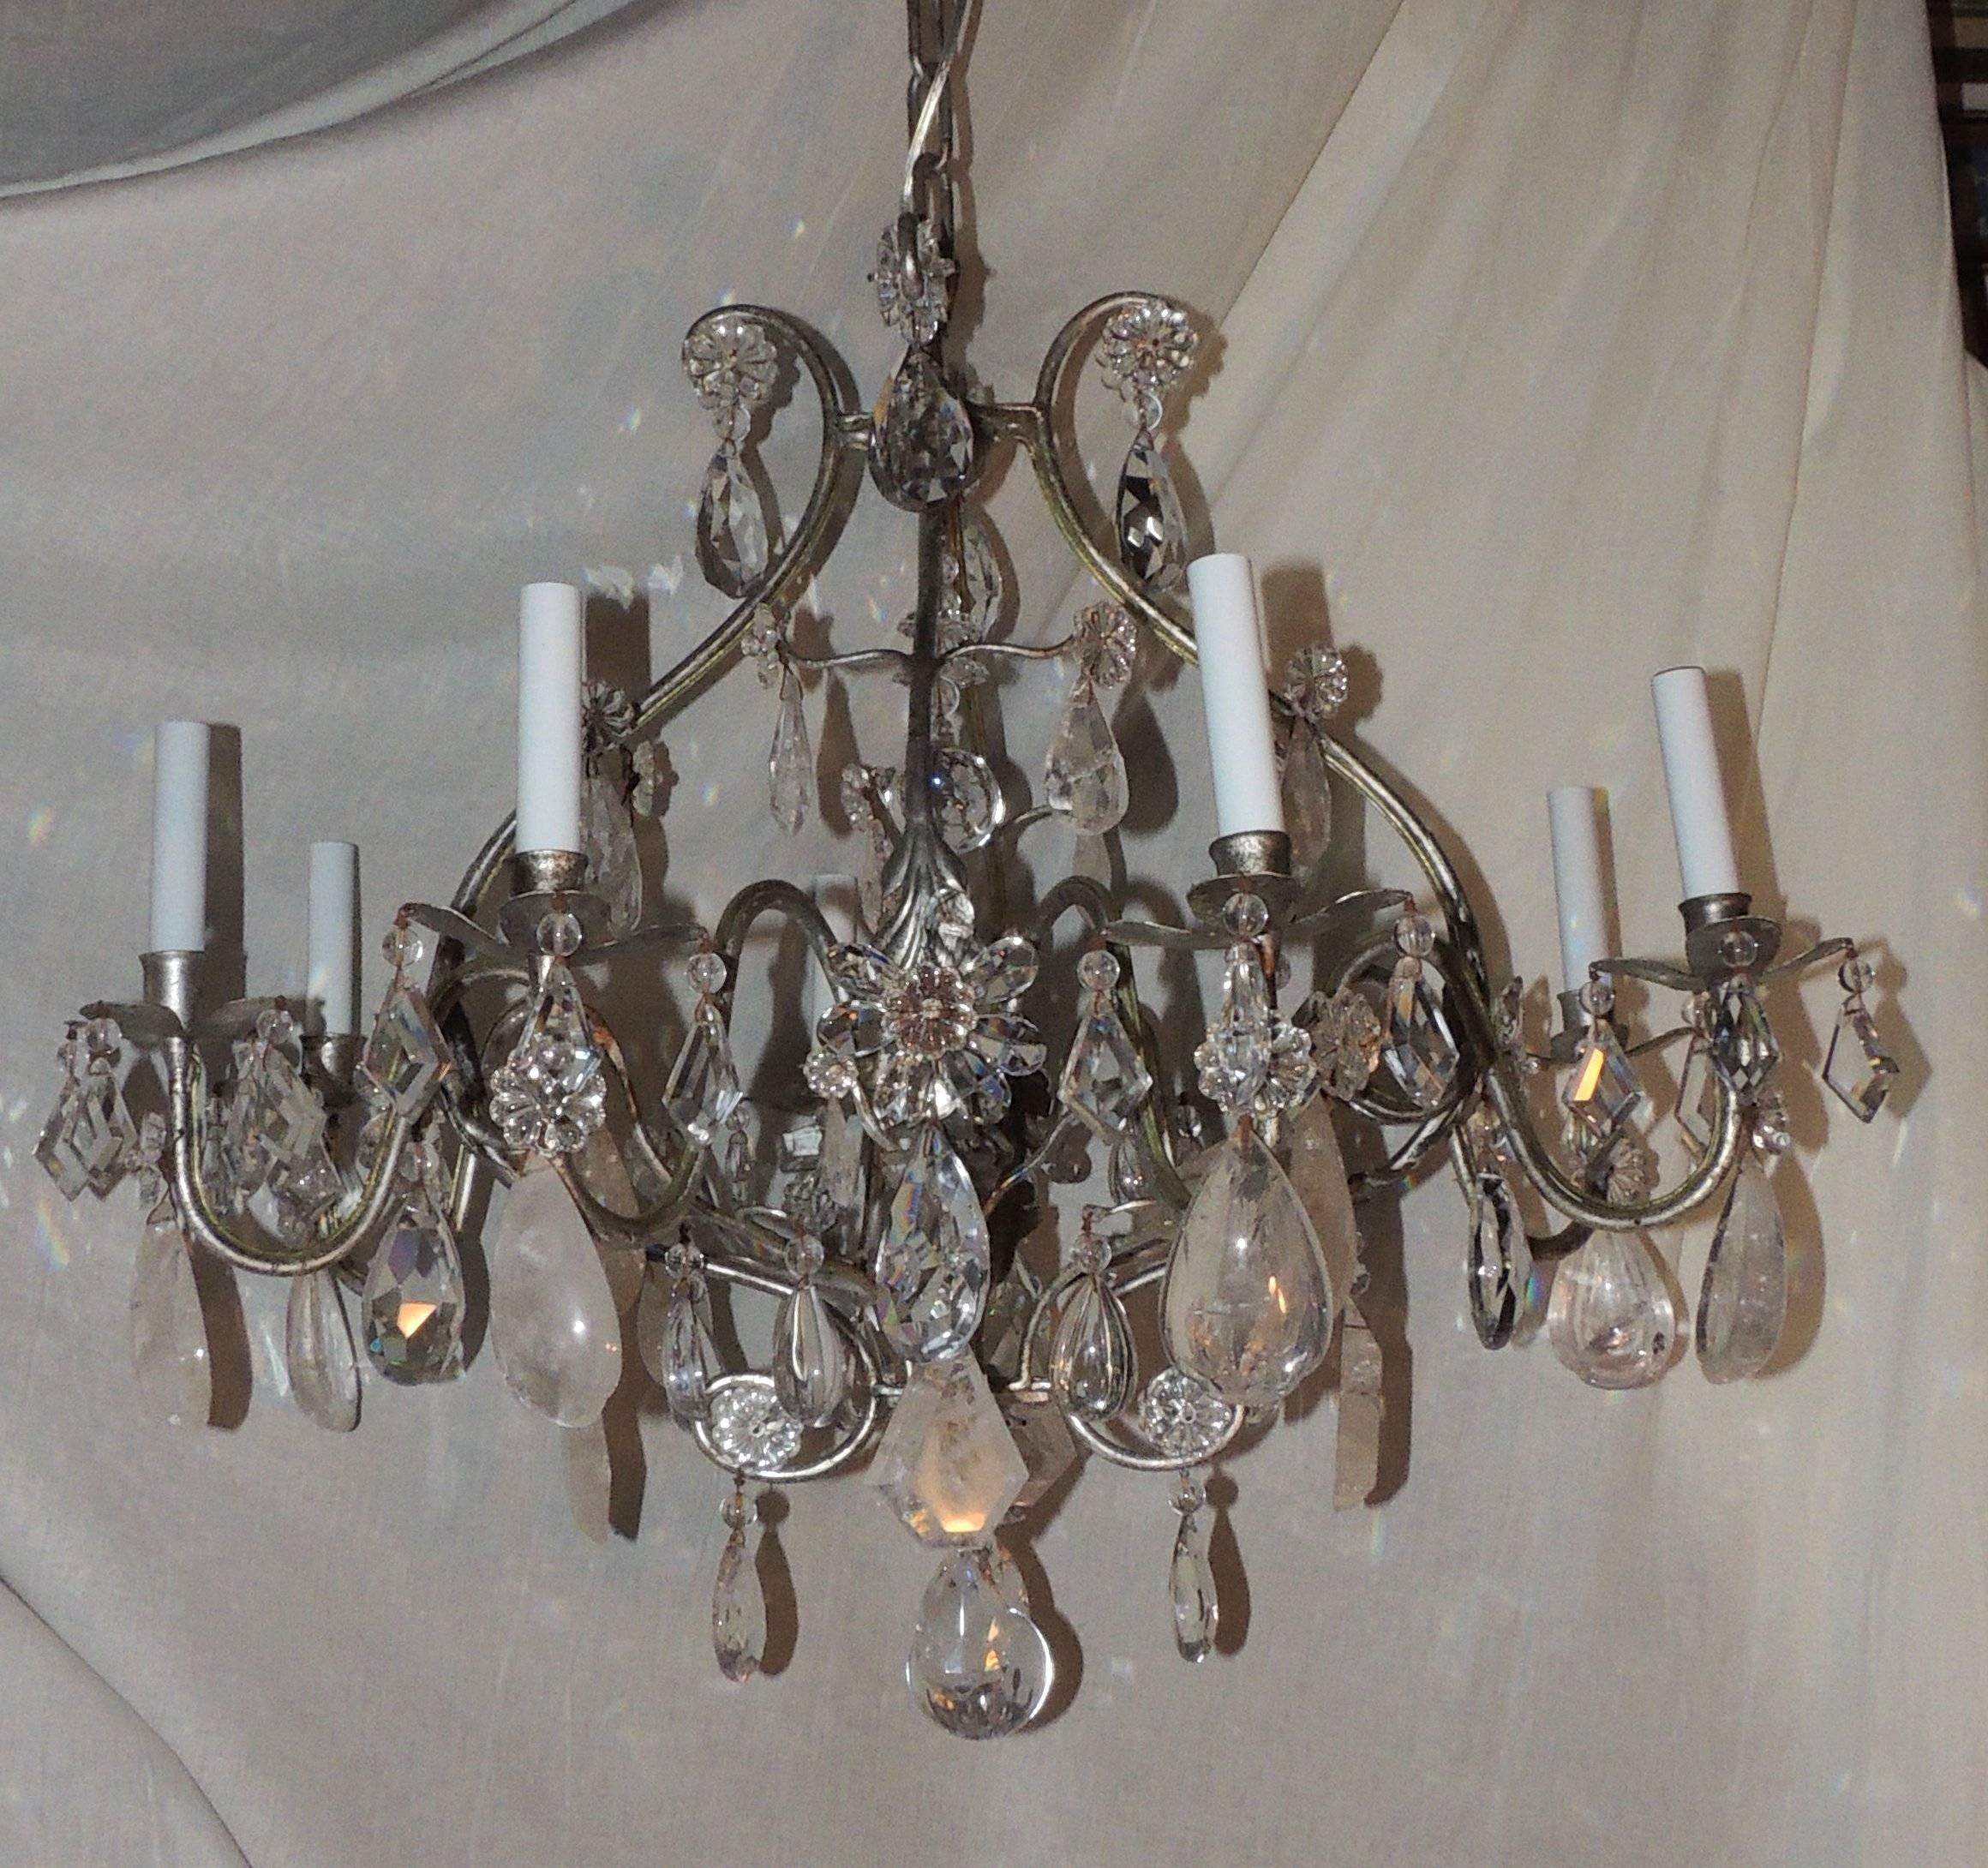 Transitional silvered gilt bagues eight-light rock crystal Jansen chandelier fixture


Measures: 30